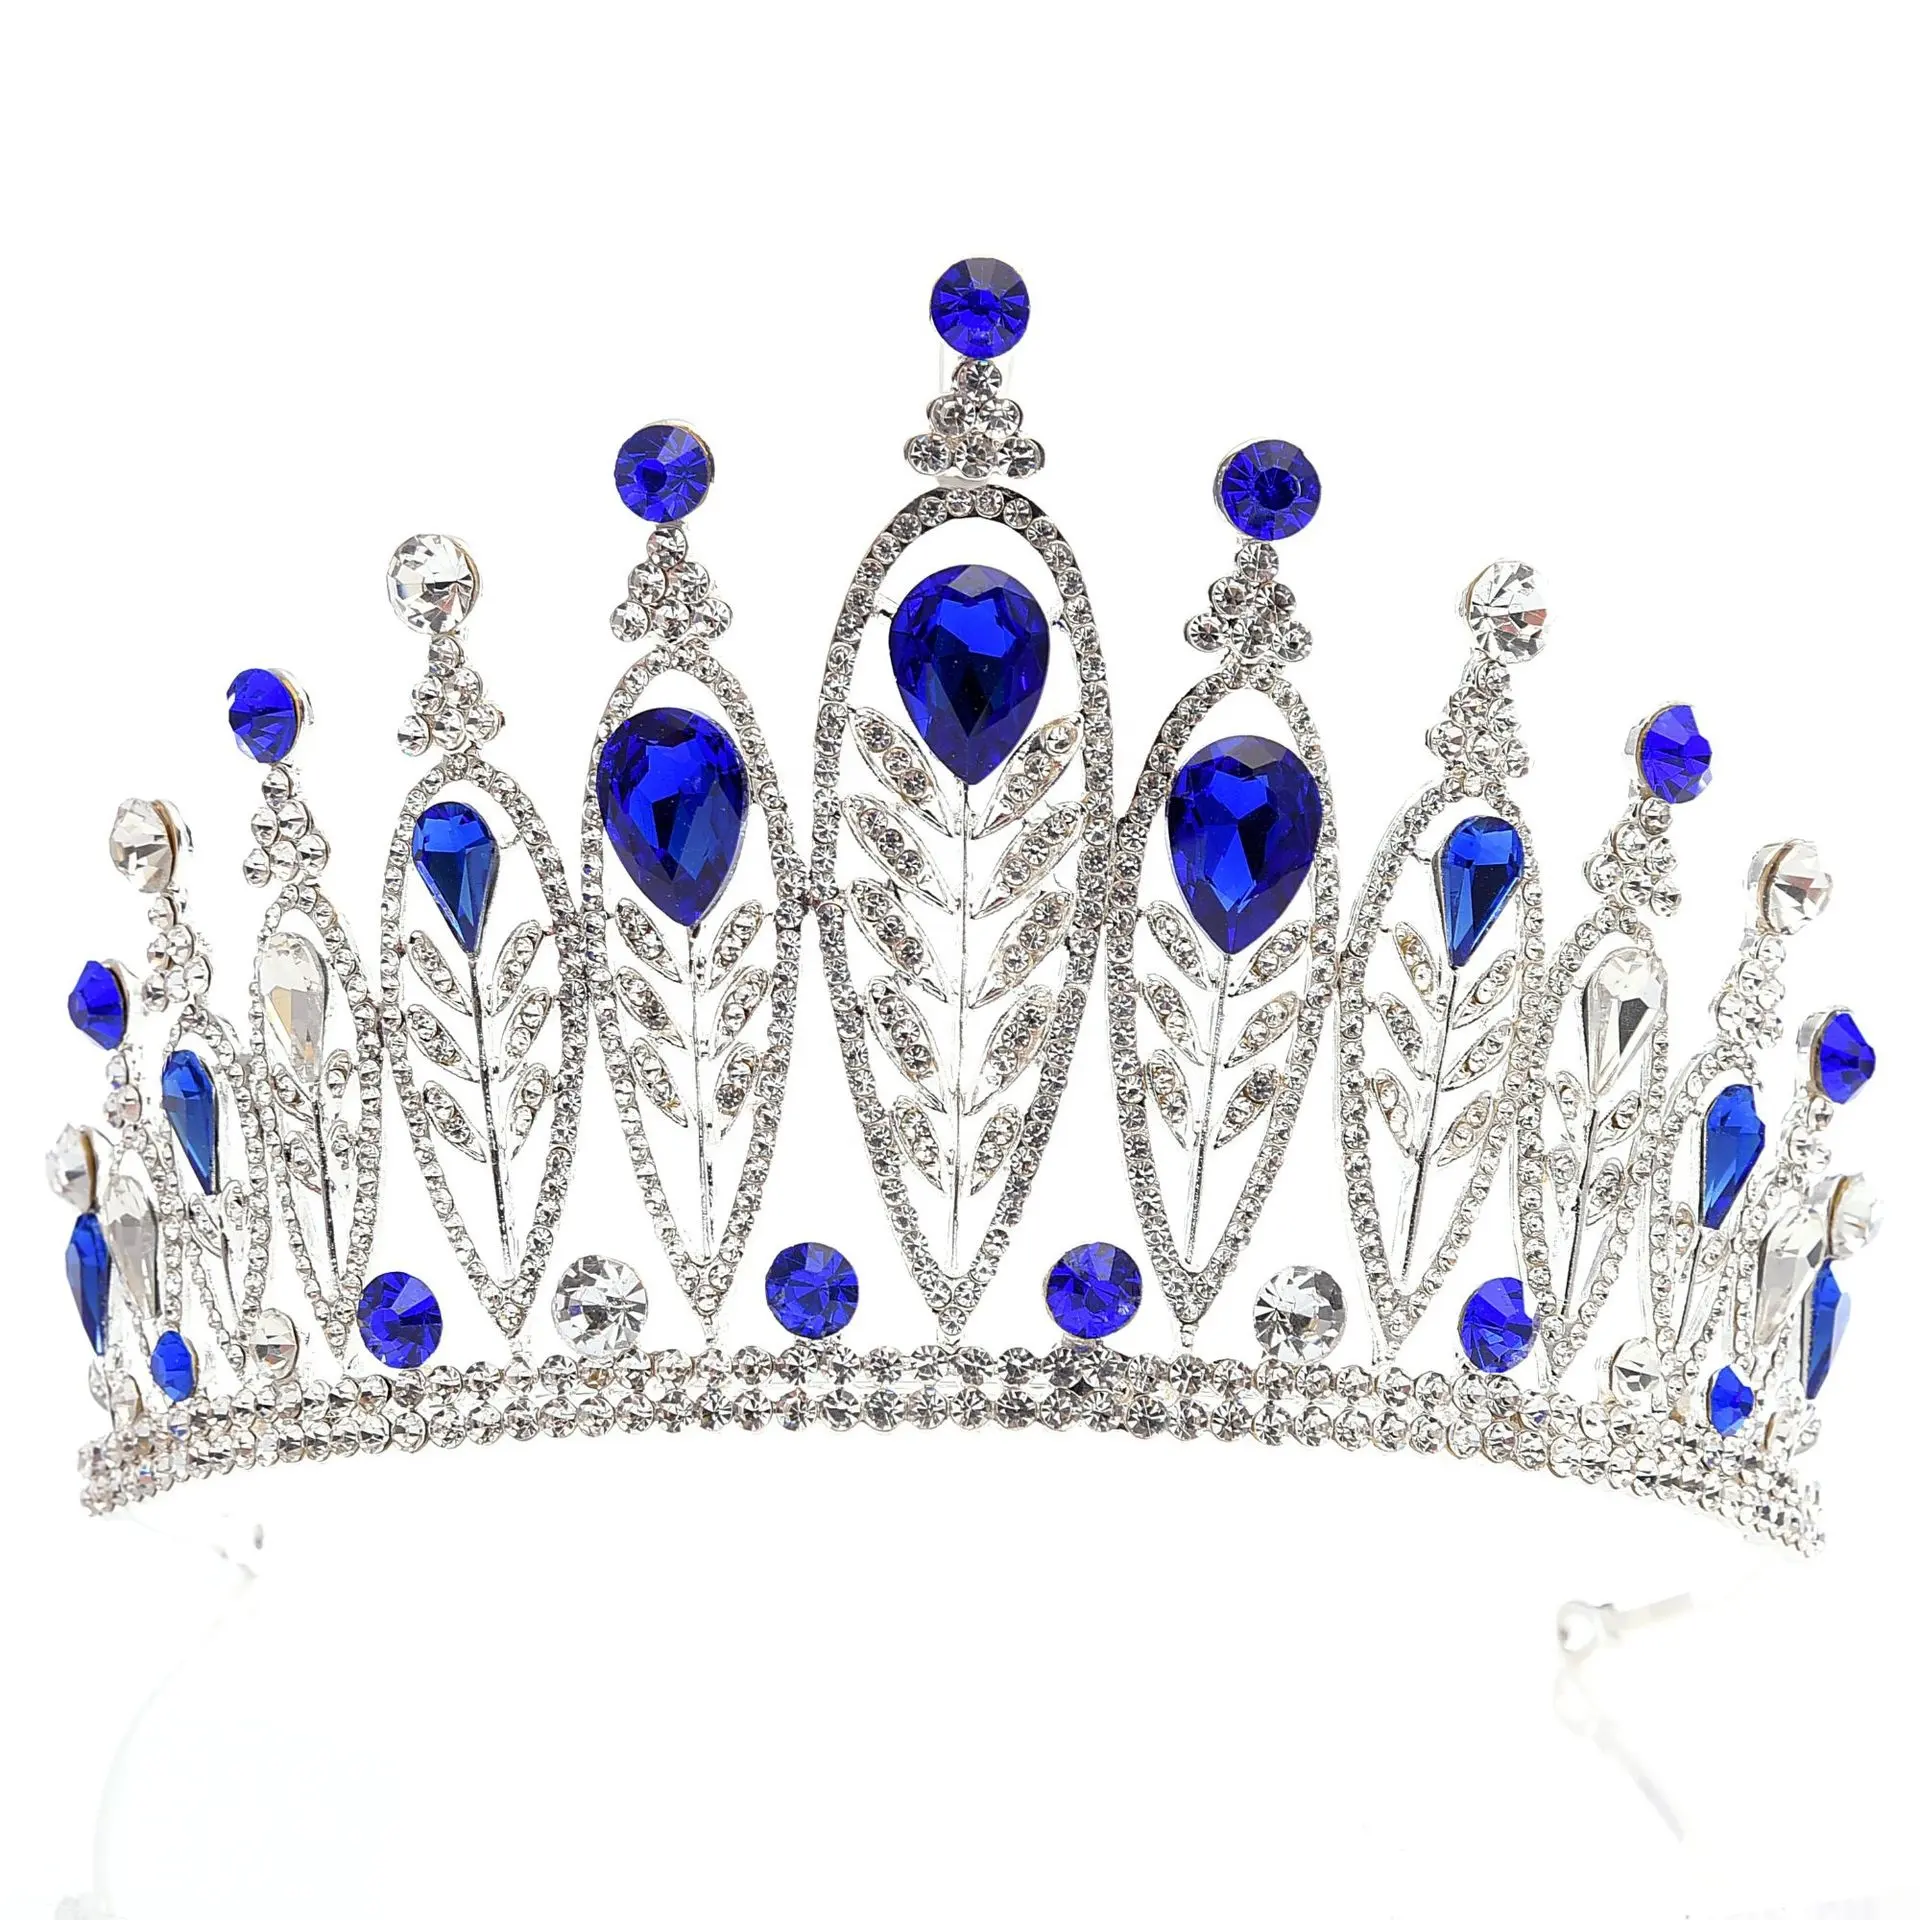 Cheerfeel avanzado personalizado de Metal de fiesta de boda de novia pelo de la princesa tiaras diamante hecho a mano coronas azul pelo accesorio HP438